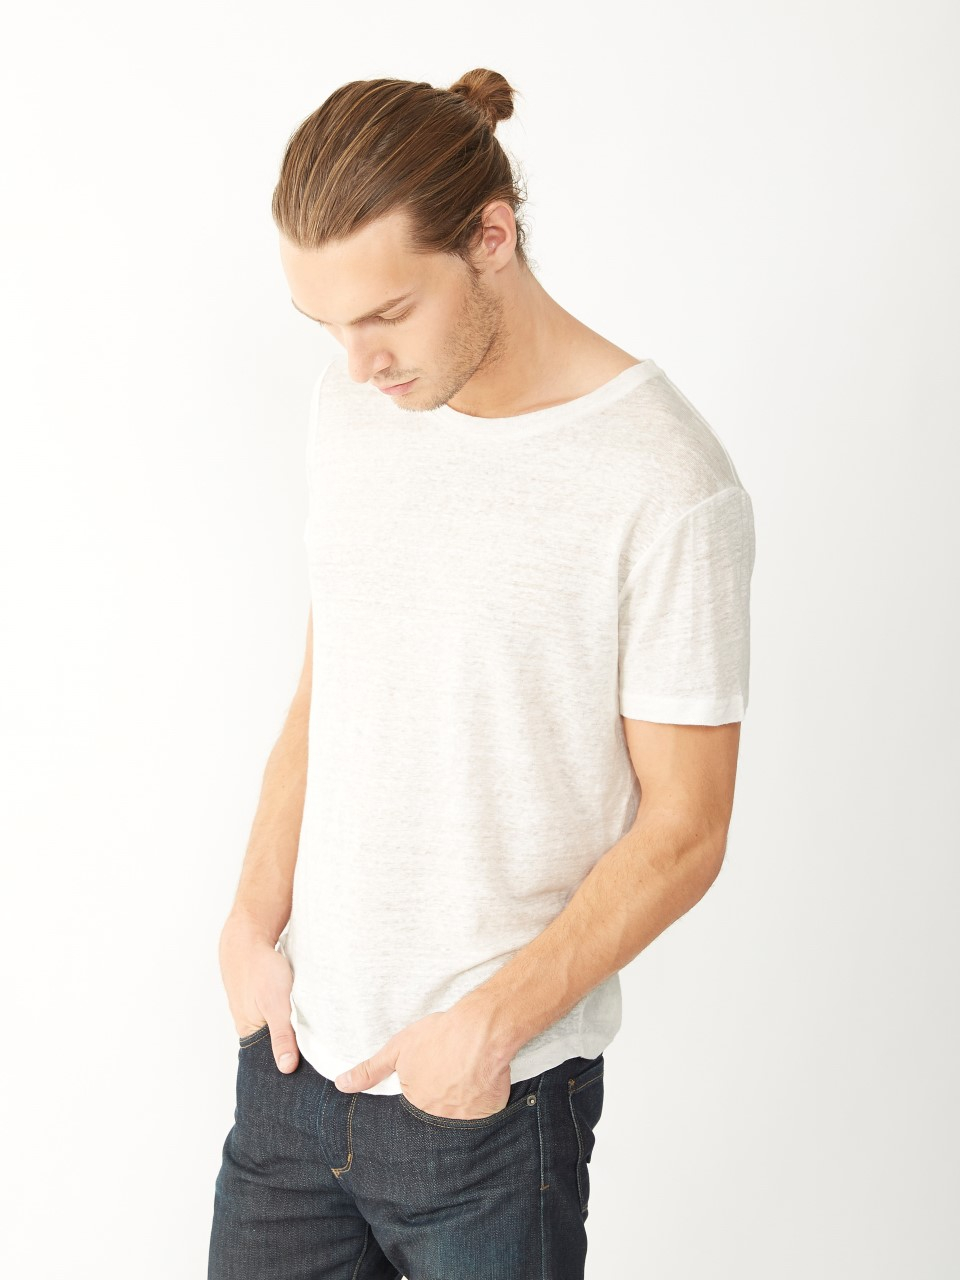 Lyst - Alternative Apparel Wide Neck Linen Tshirt in White for Men